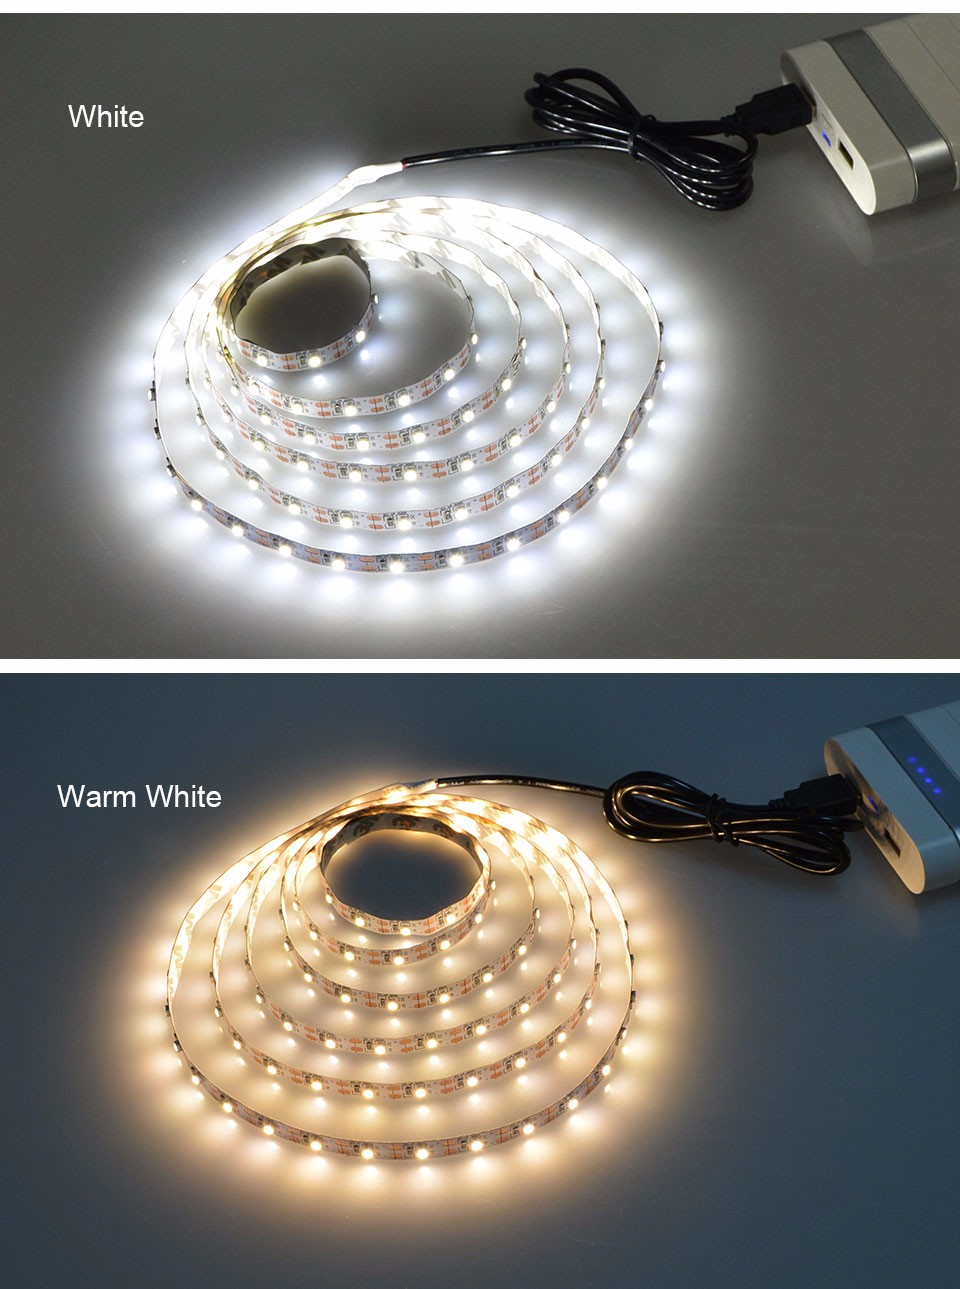 LED Lamp DC 5V RGB USB LED Strip Light 3528 SMD 1M 2M 3M 4M 5M white warm Flexible ribbon Tape TV Background home lighting